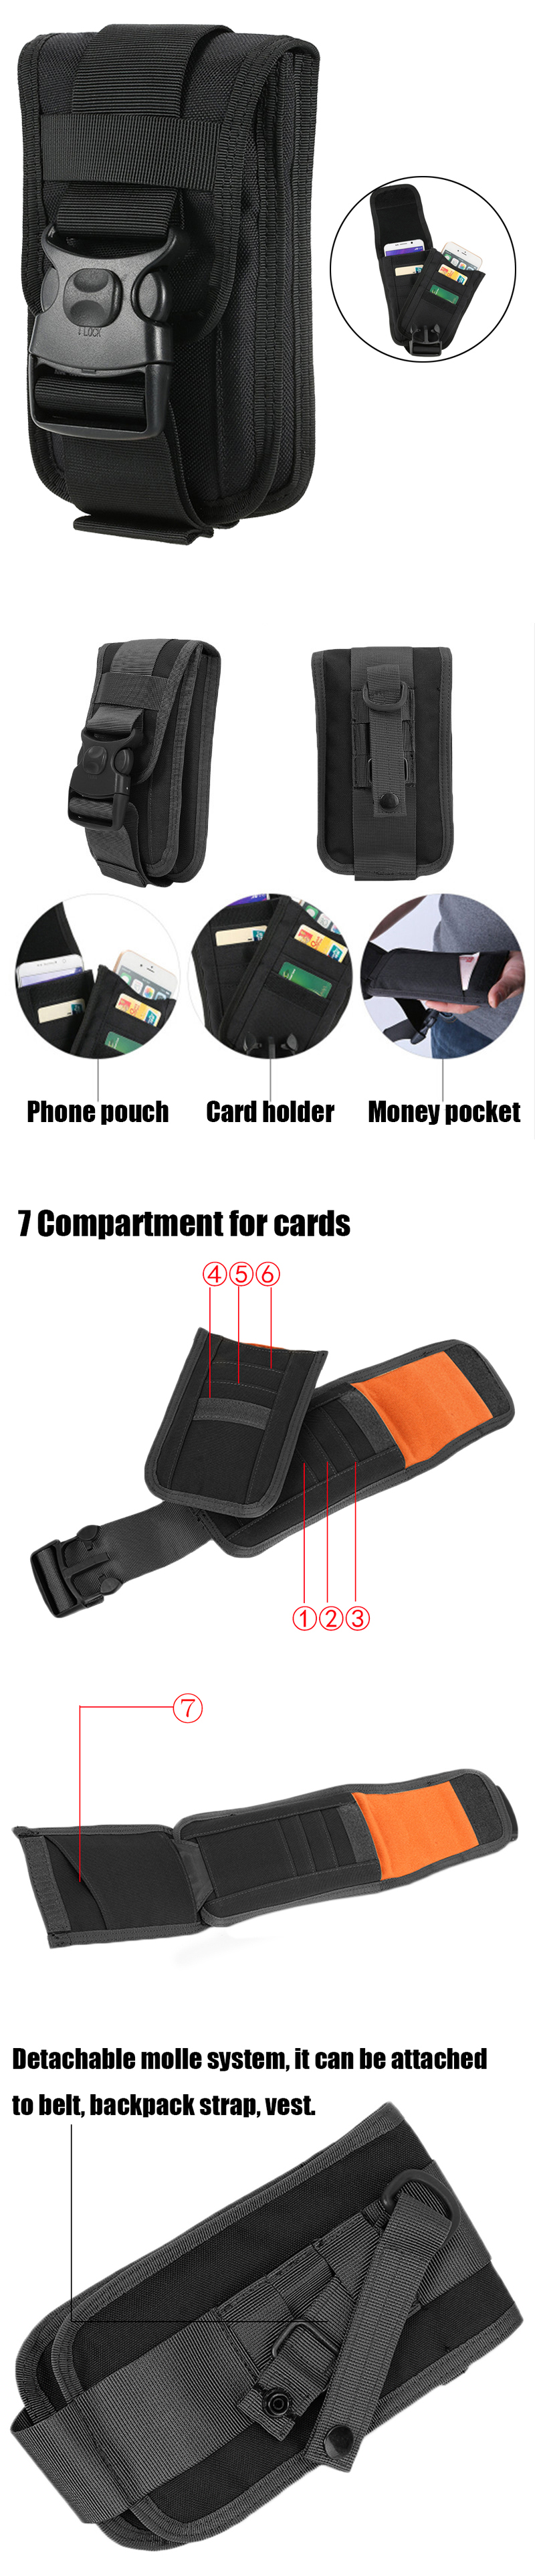 Molle-Tactical-Phone-Bag-Card-Holder-EDC-Gadget-Bag-Oxford-Portable-Waterproof-Waist-Belt-Organizer-1587831-1